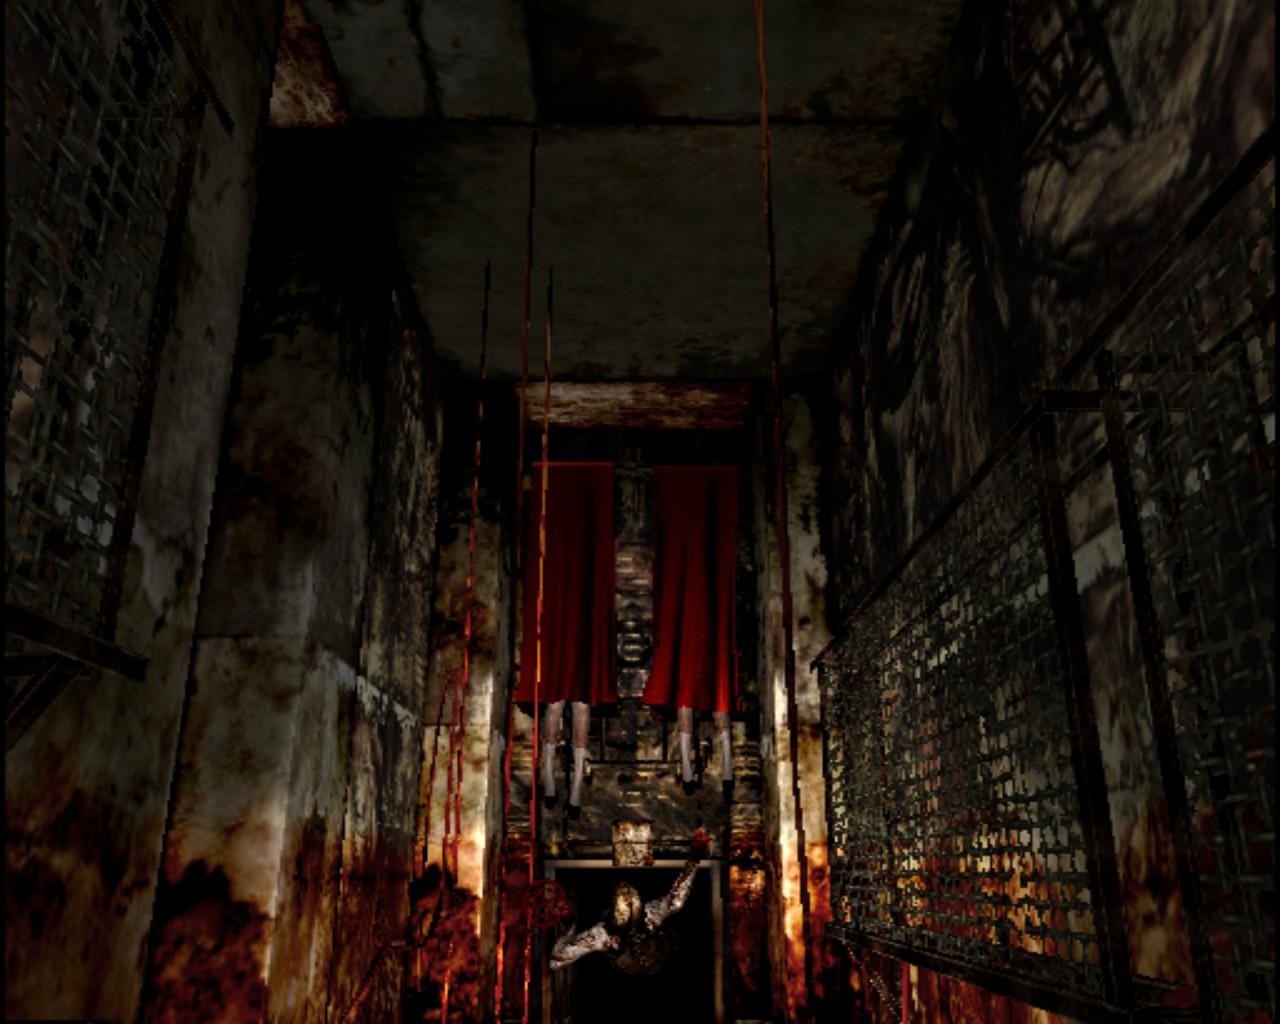 X Jpeg 123kb Silent Hill Valtiel Wallpaper By Parrafahell